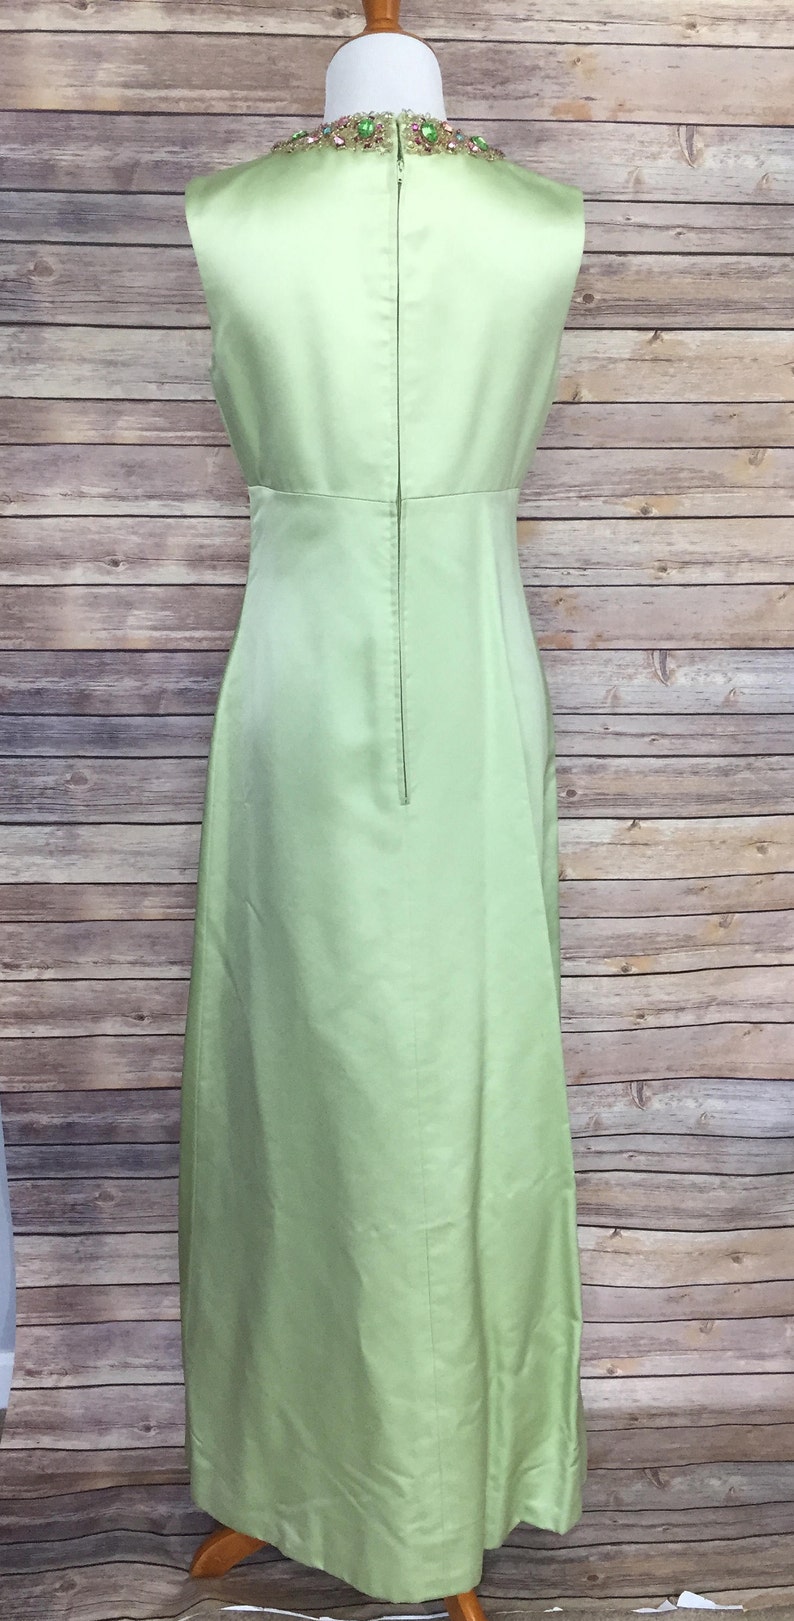 Rhinestone Studded Formal Floor Length Dress Light Green - Etsy